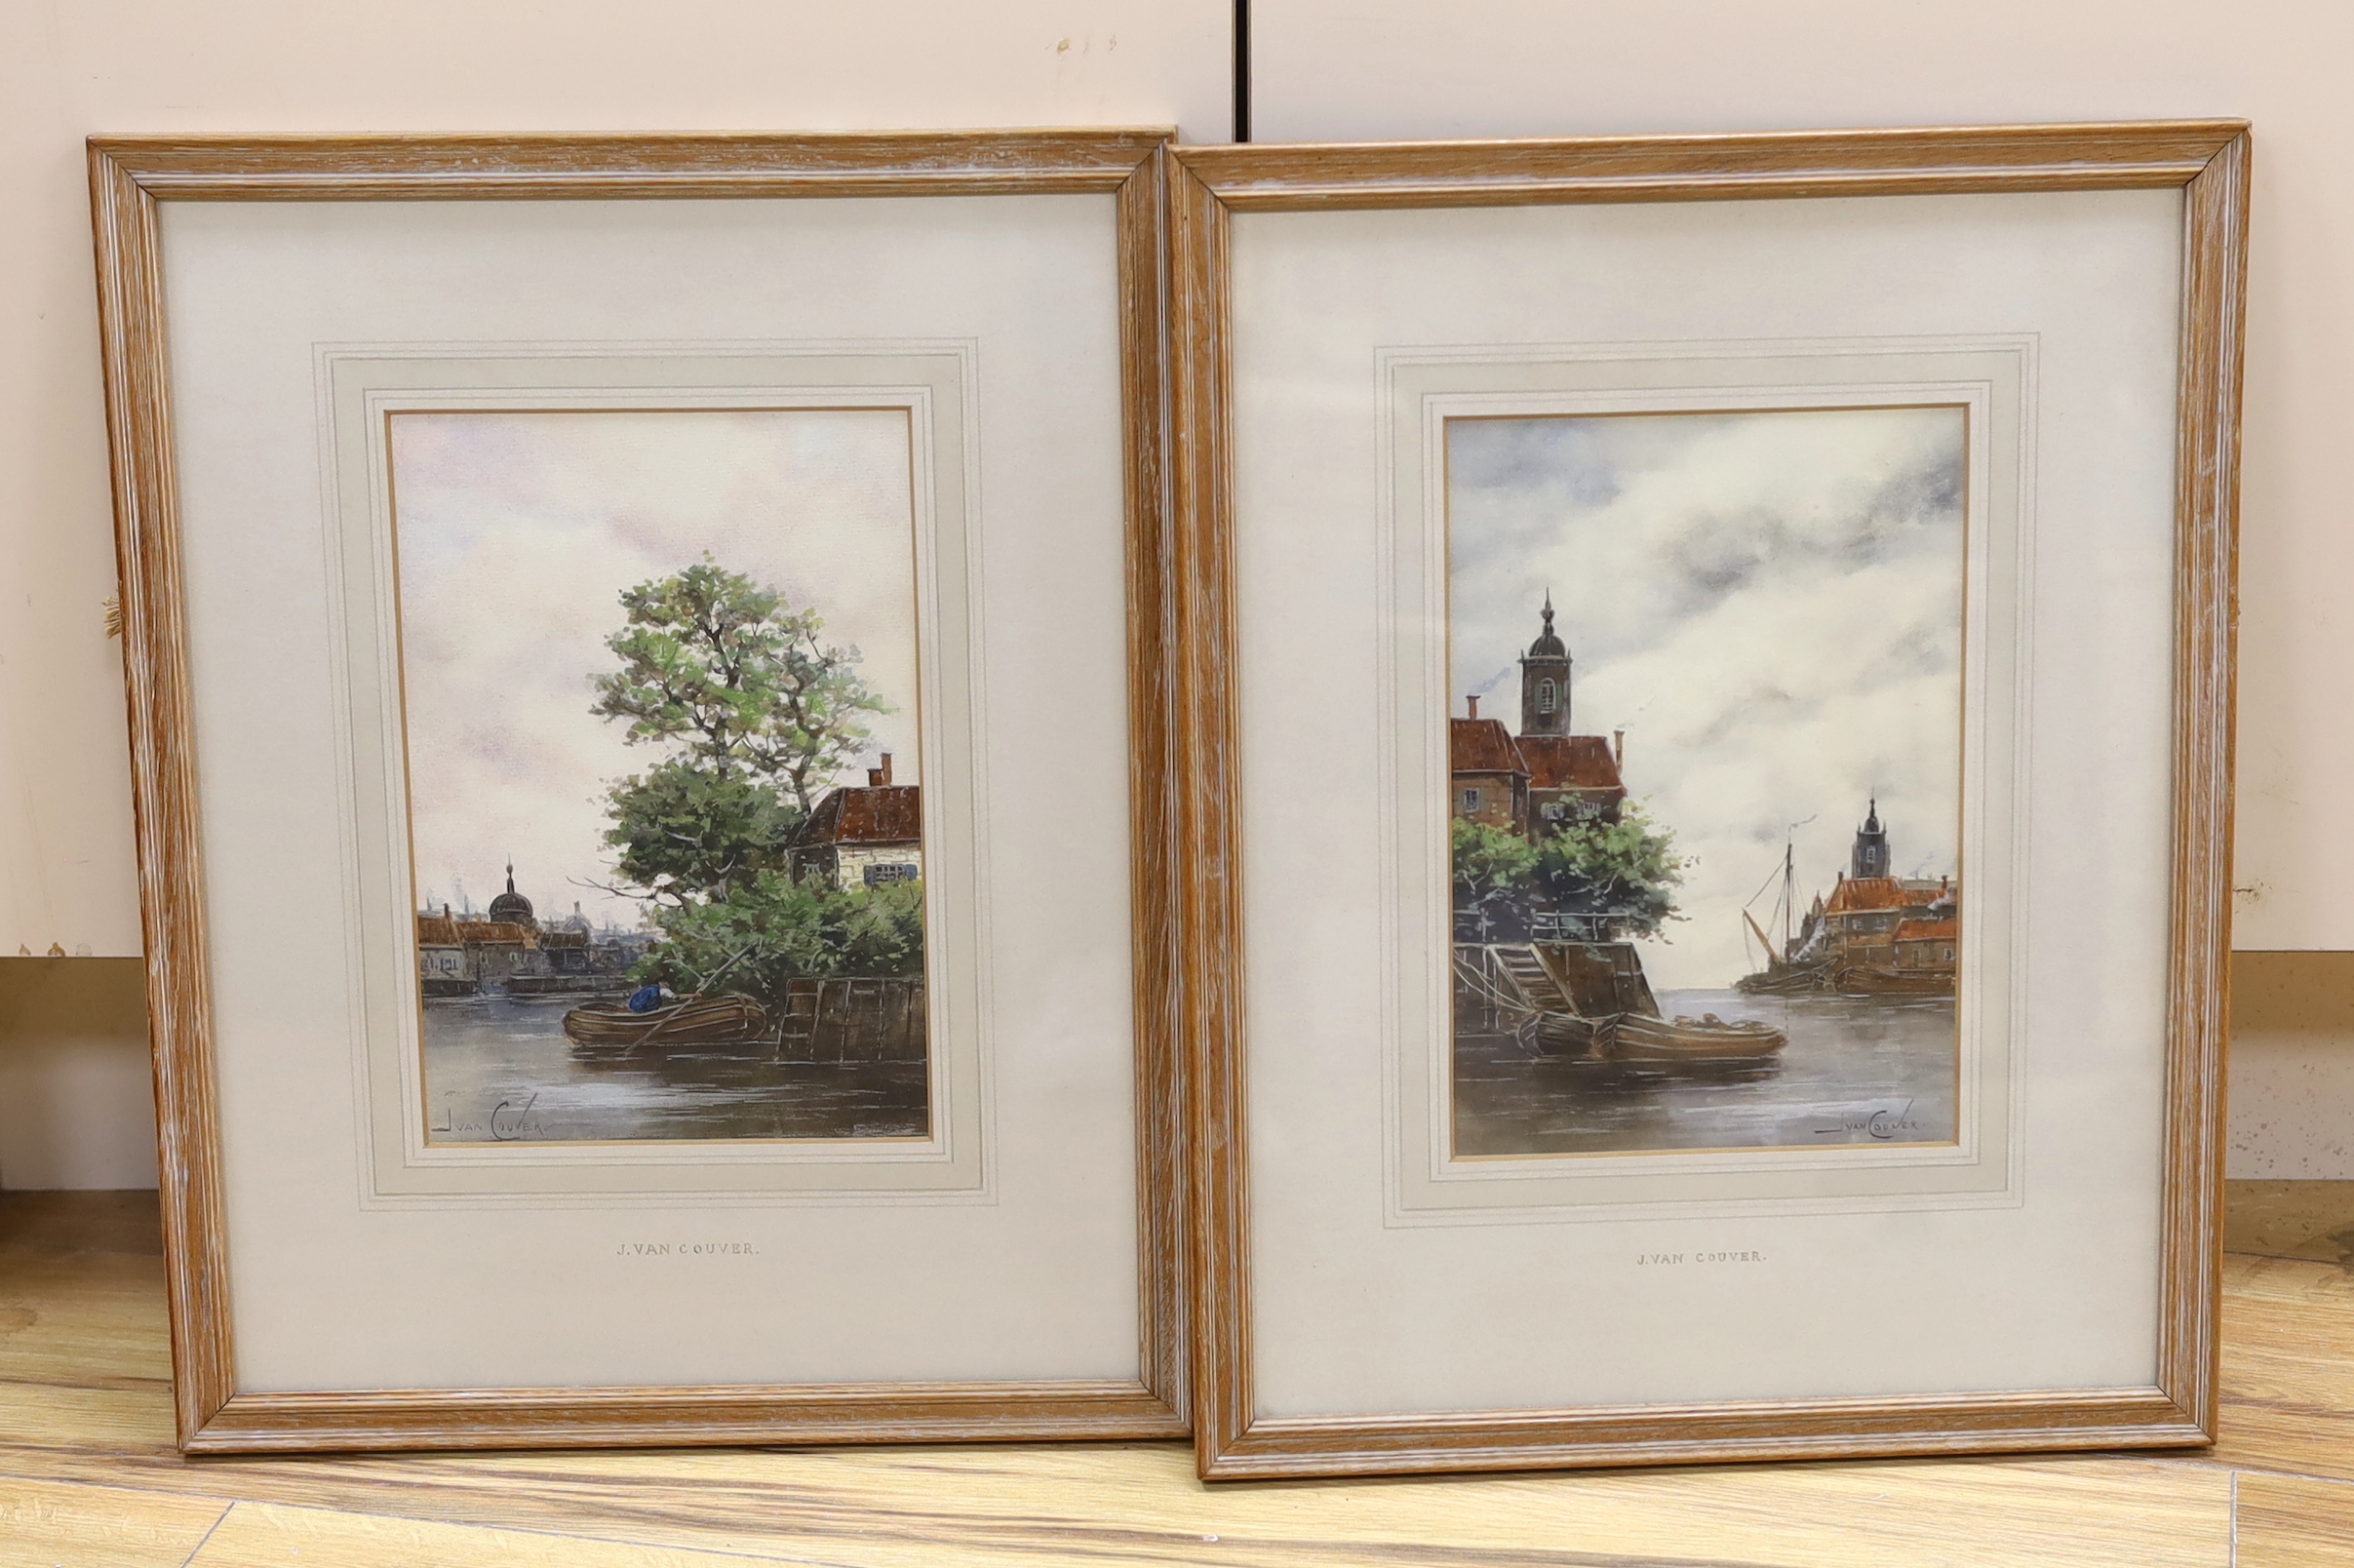 Jan Van Couver (Dutch, 1836-1909), pair of watercolours, River landscapes with barges, each signed, labels verso, 25 x 17cm